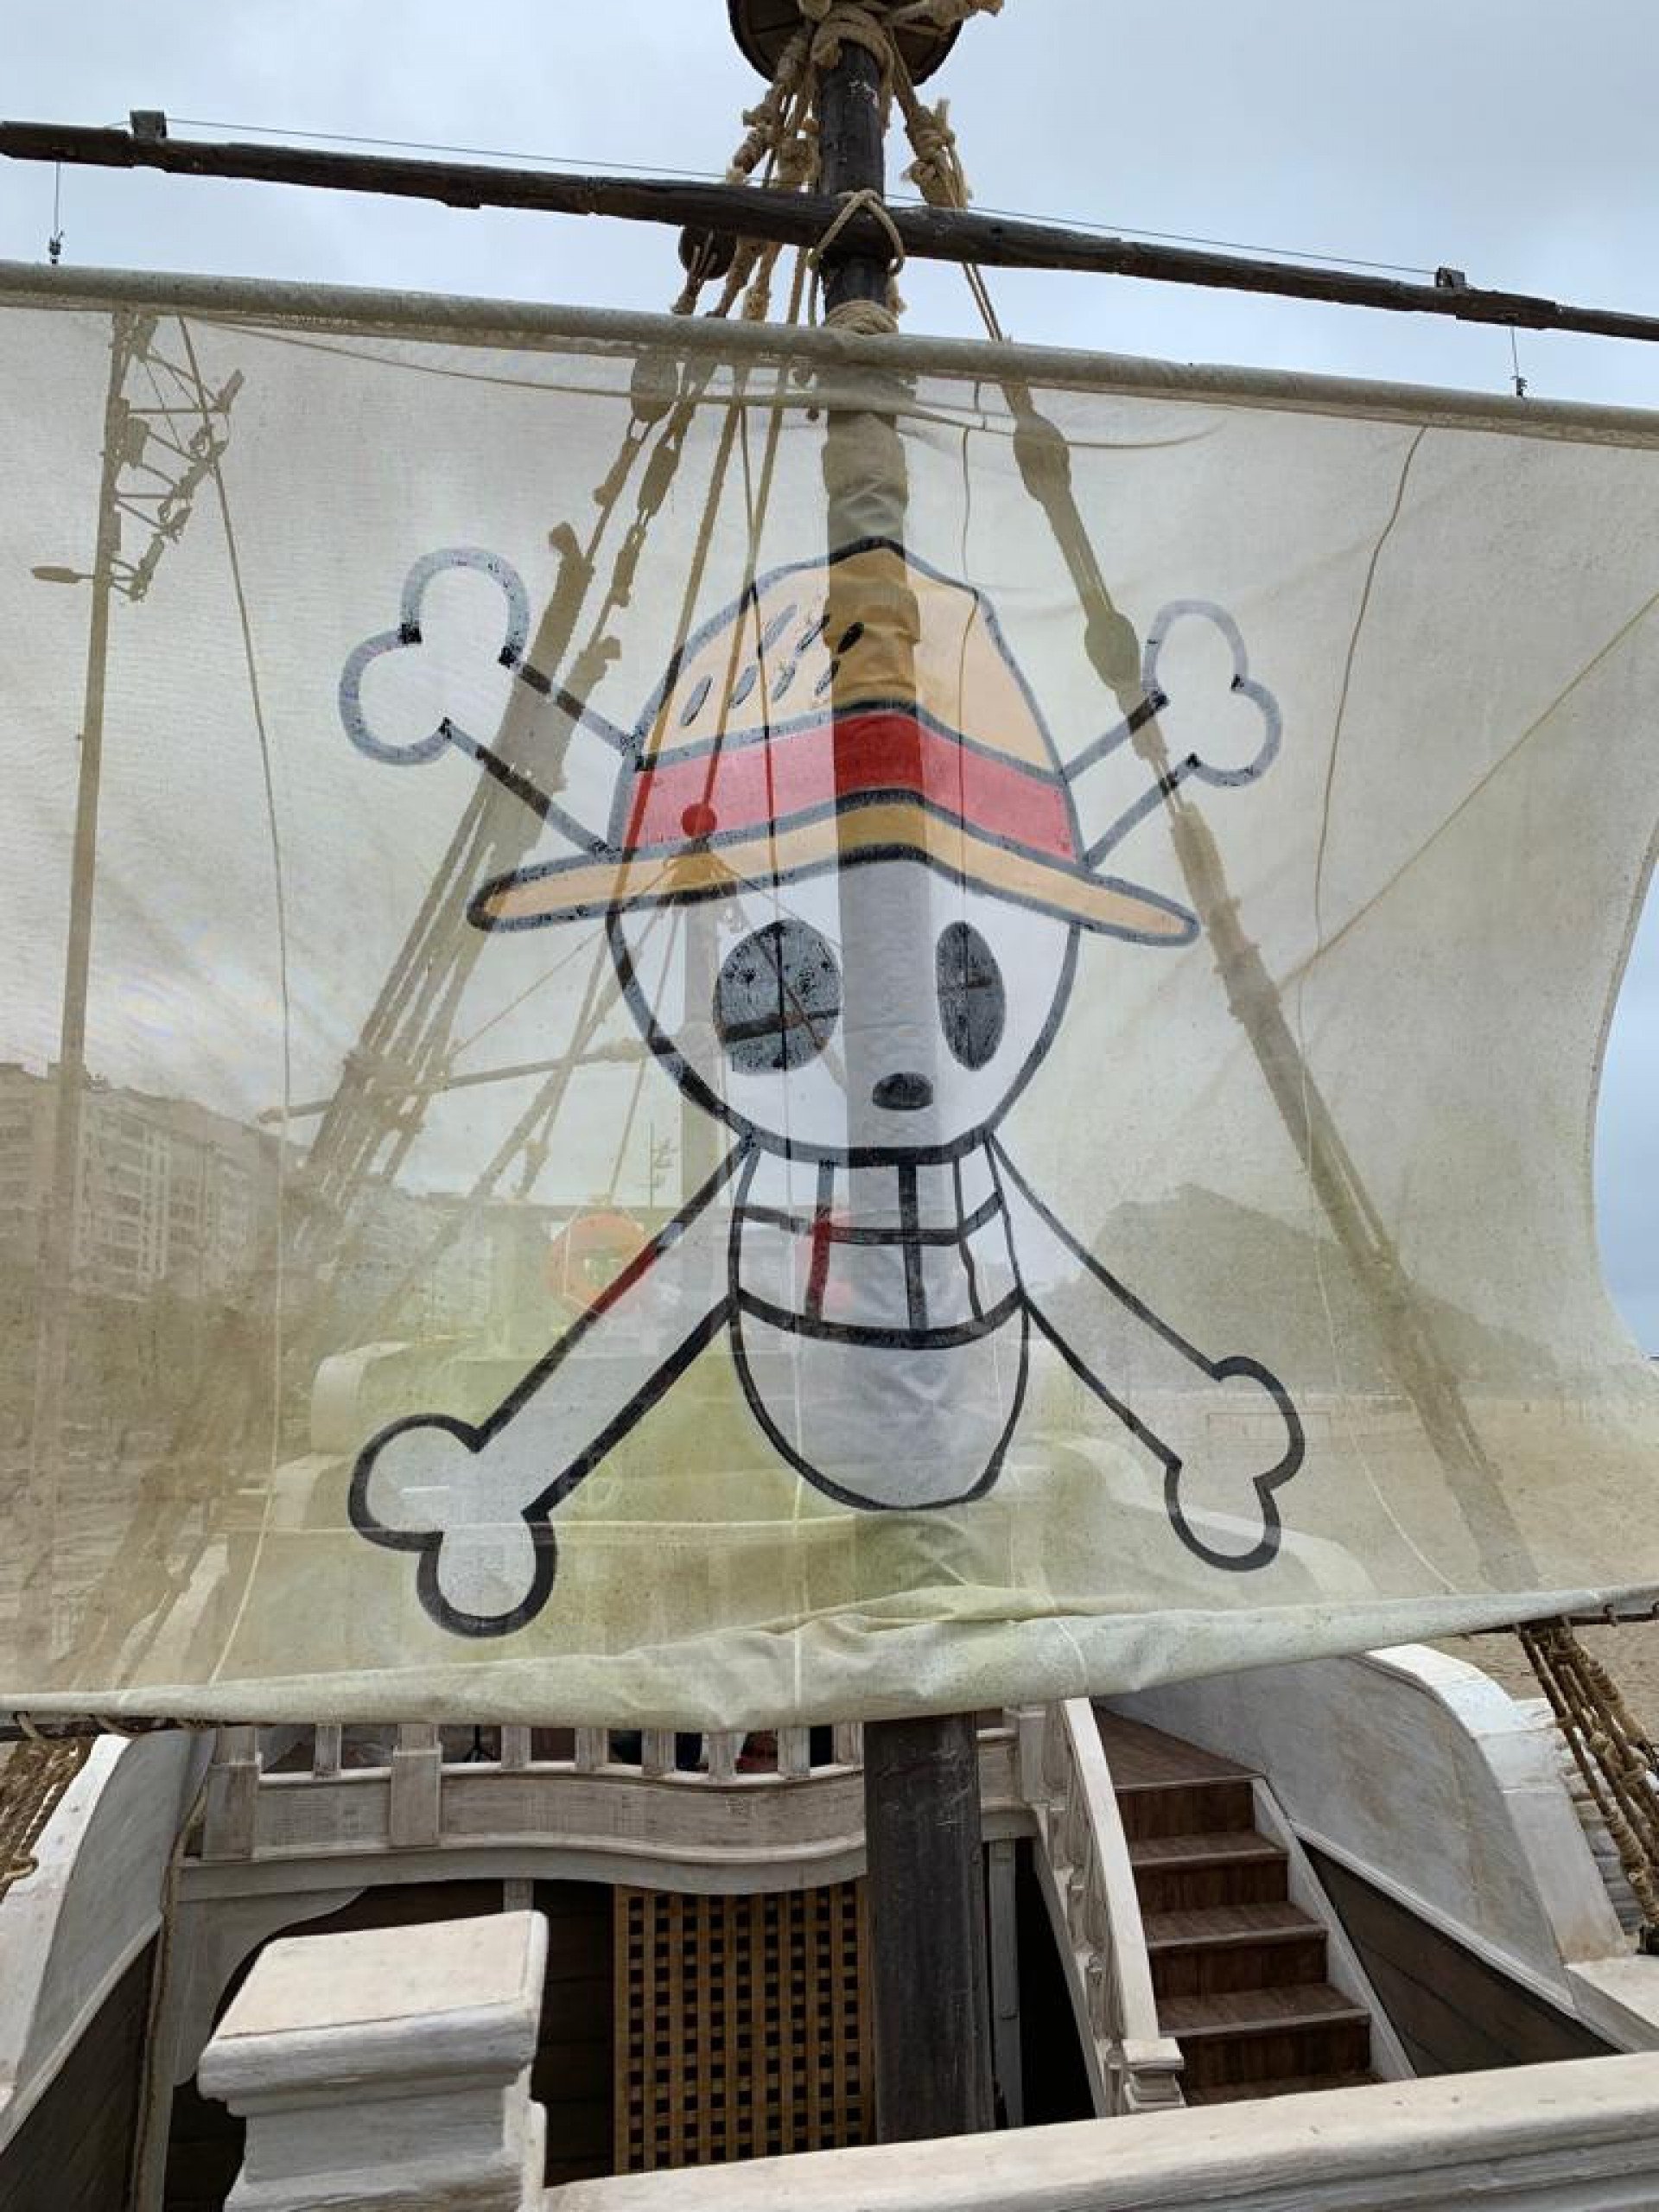 GOING MERRY ATRACOU NA PRAIA DE COPACABANA 🚢🏴‍☠️ O Going Merry navio